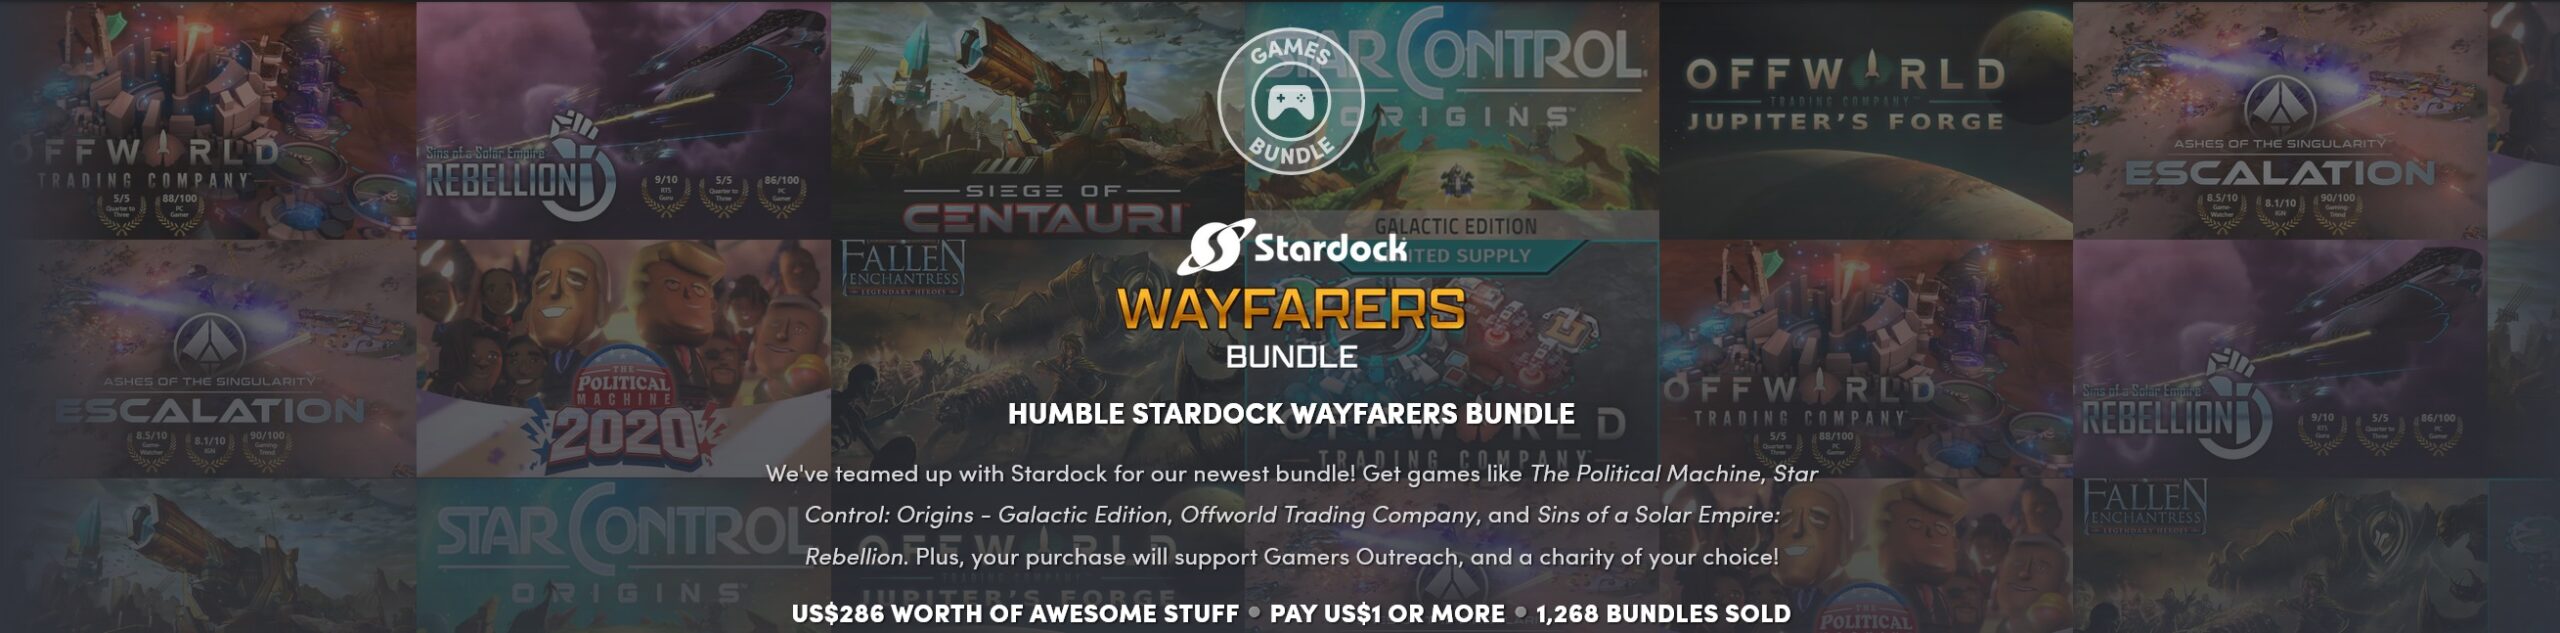 Humble Stardock Wayfarers Bundle